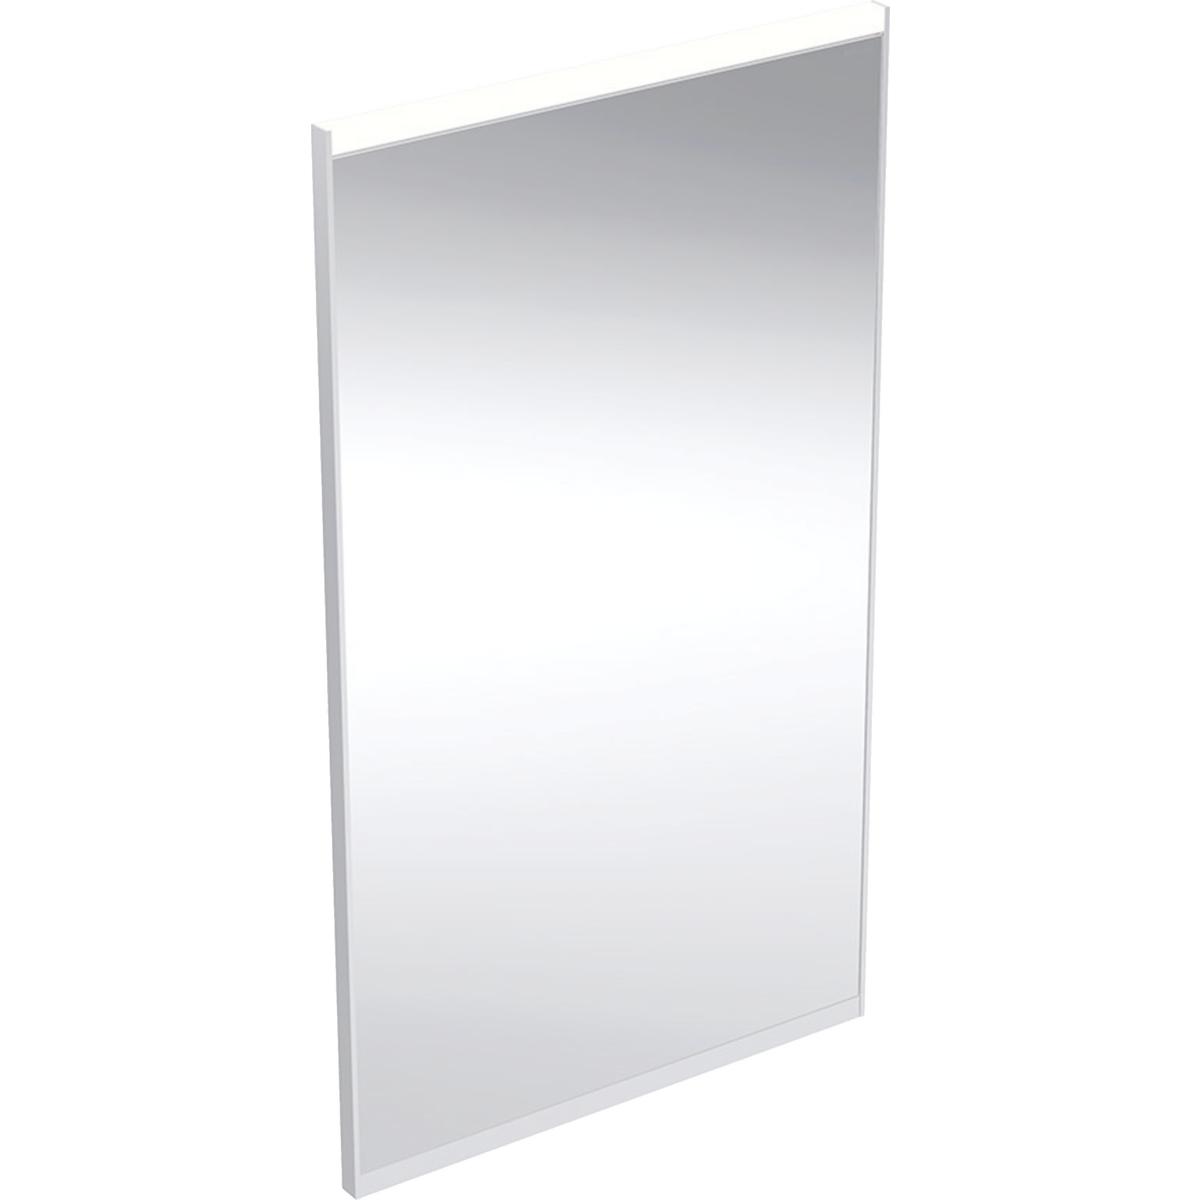 Option Plus Square illuminated mirror with lighting - 400mm